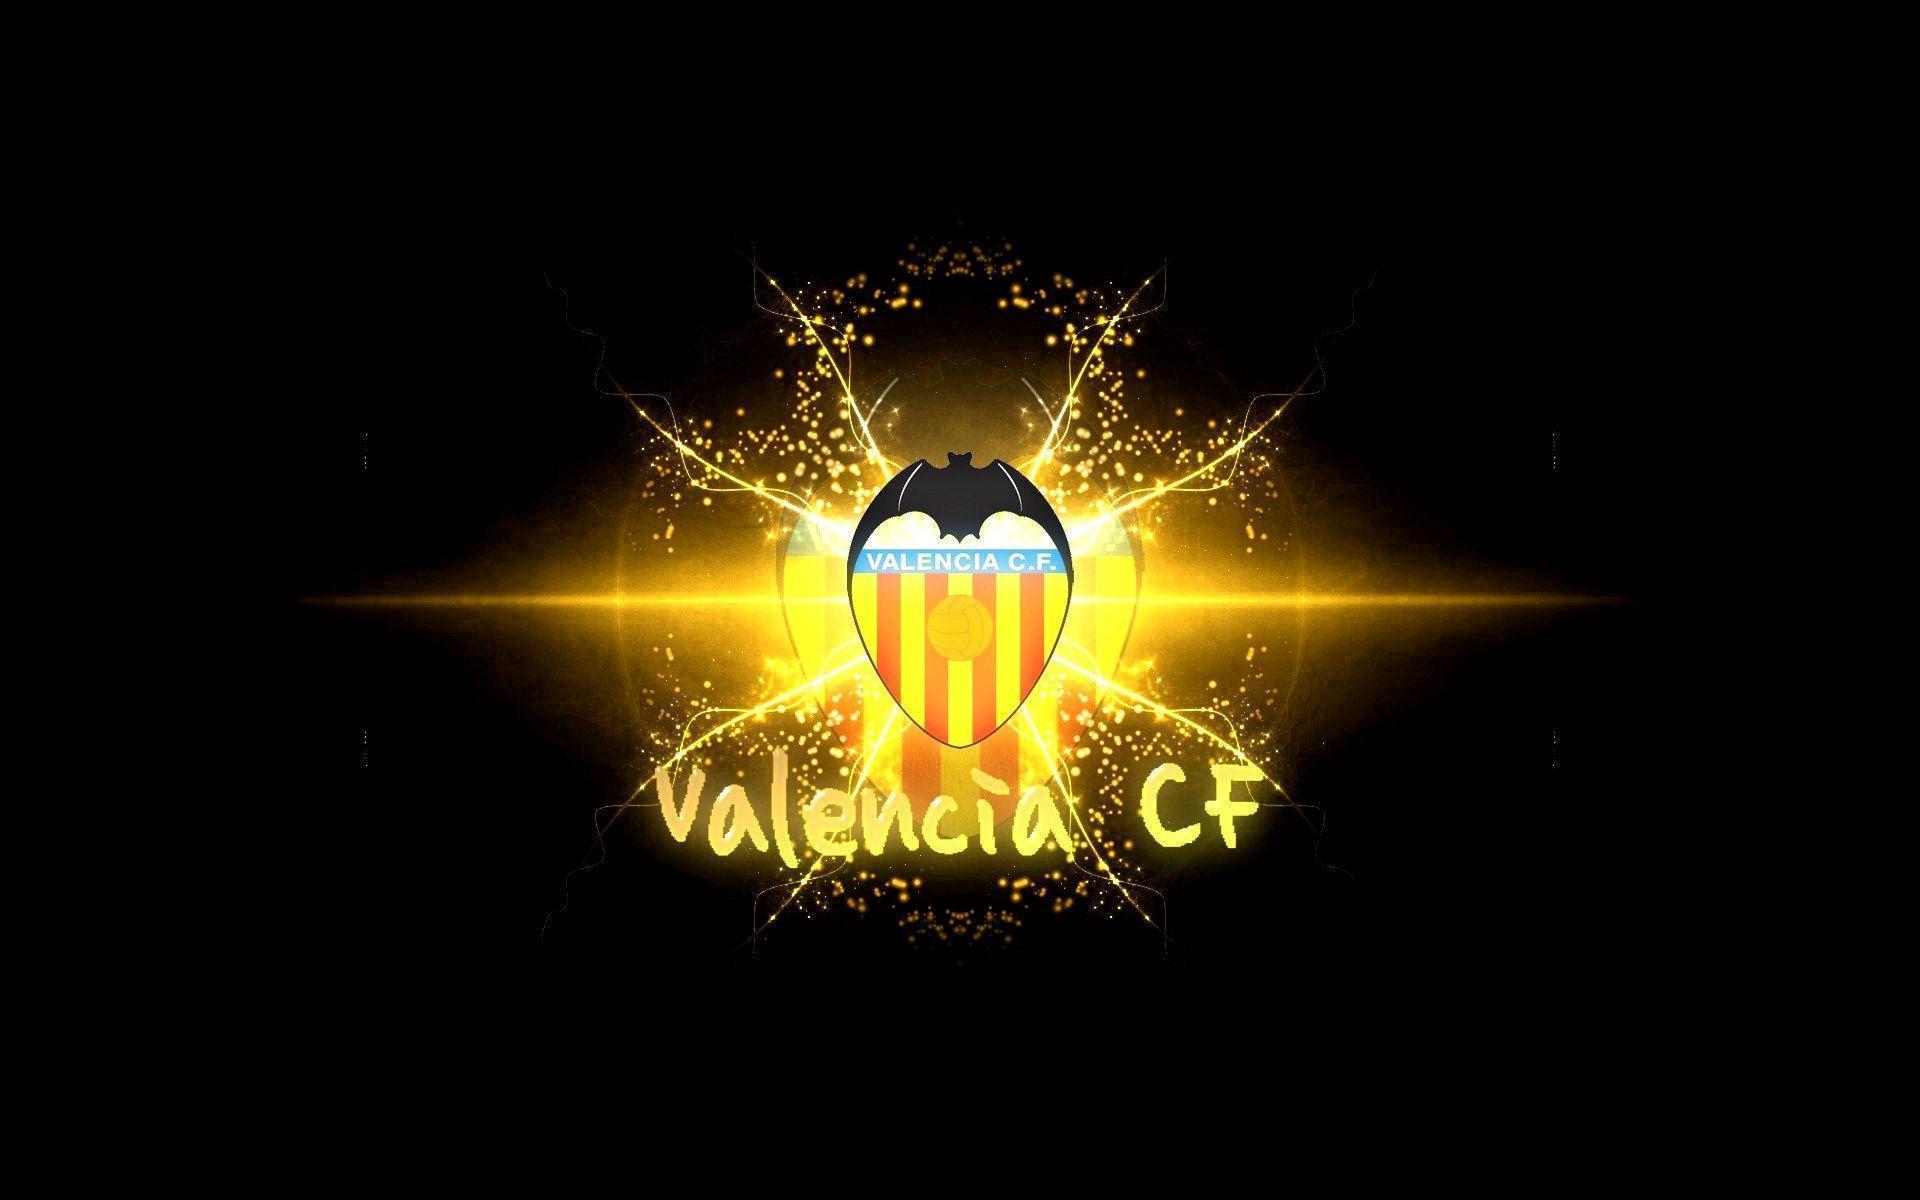 Valencia FC HD Wallpaper And Photo download